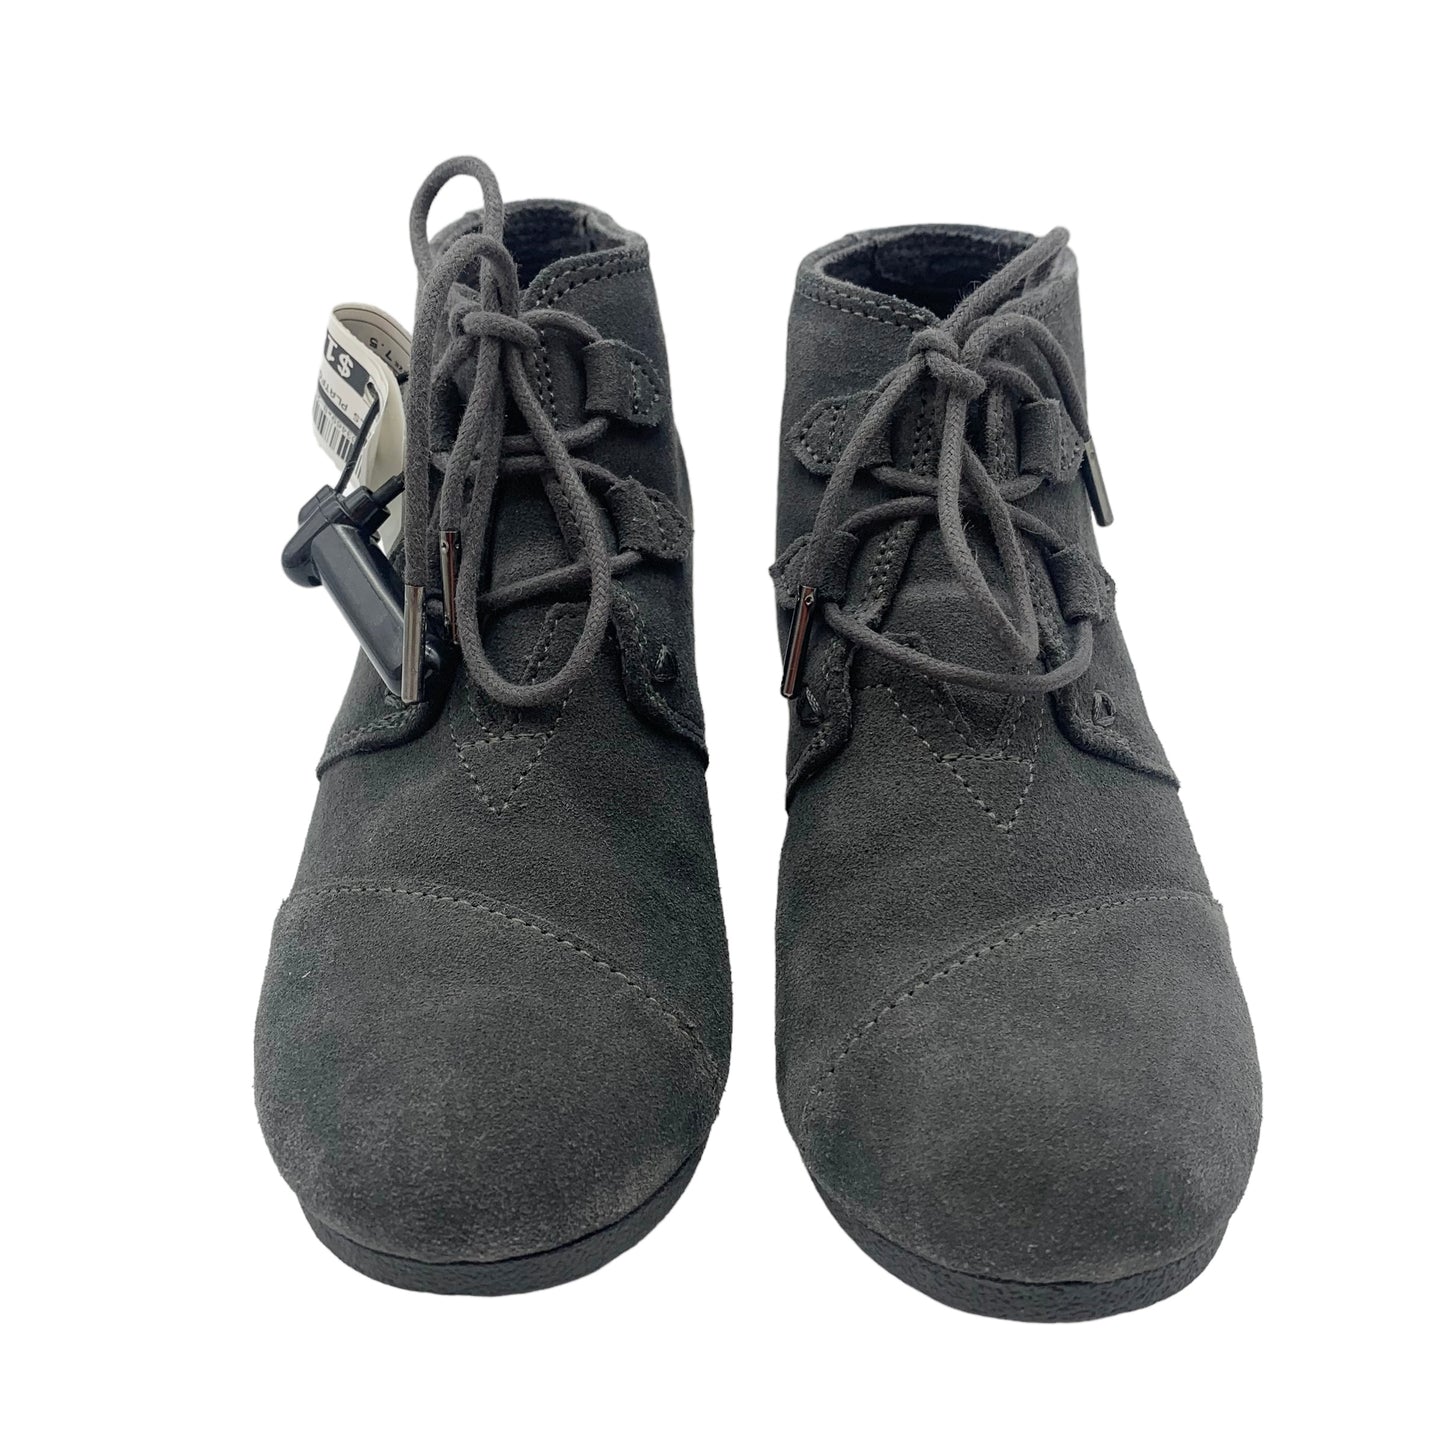 Shoes Heels Platform By Toms  Size: 7.5